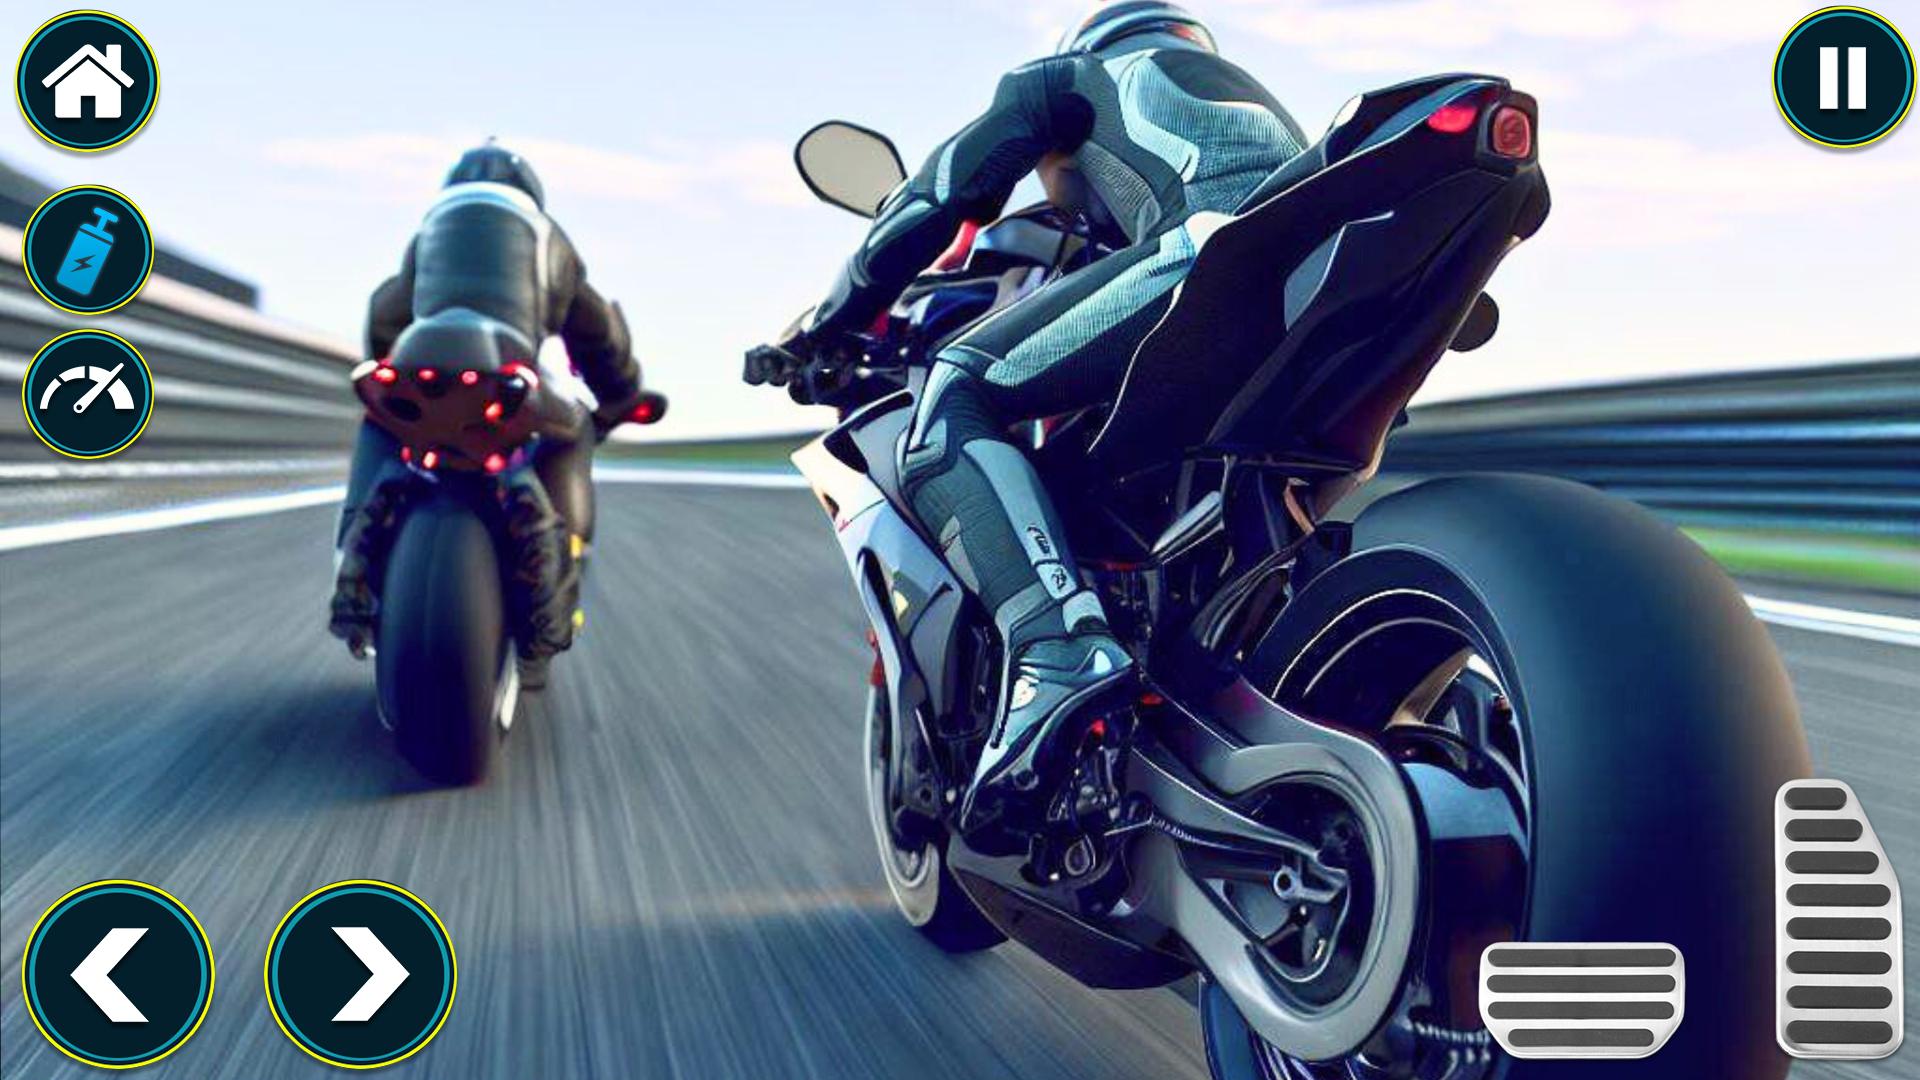 Download Moto Rider, Bike Racing Game on PC with MEmu